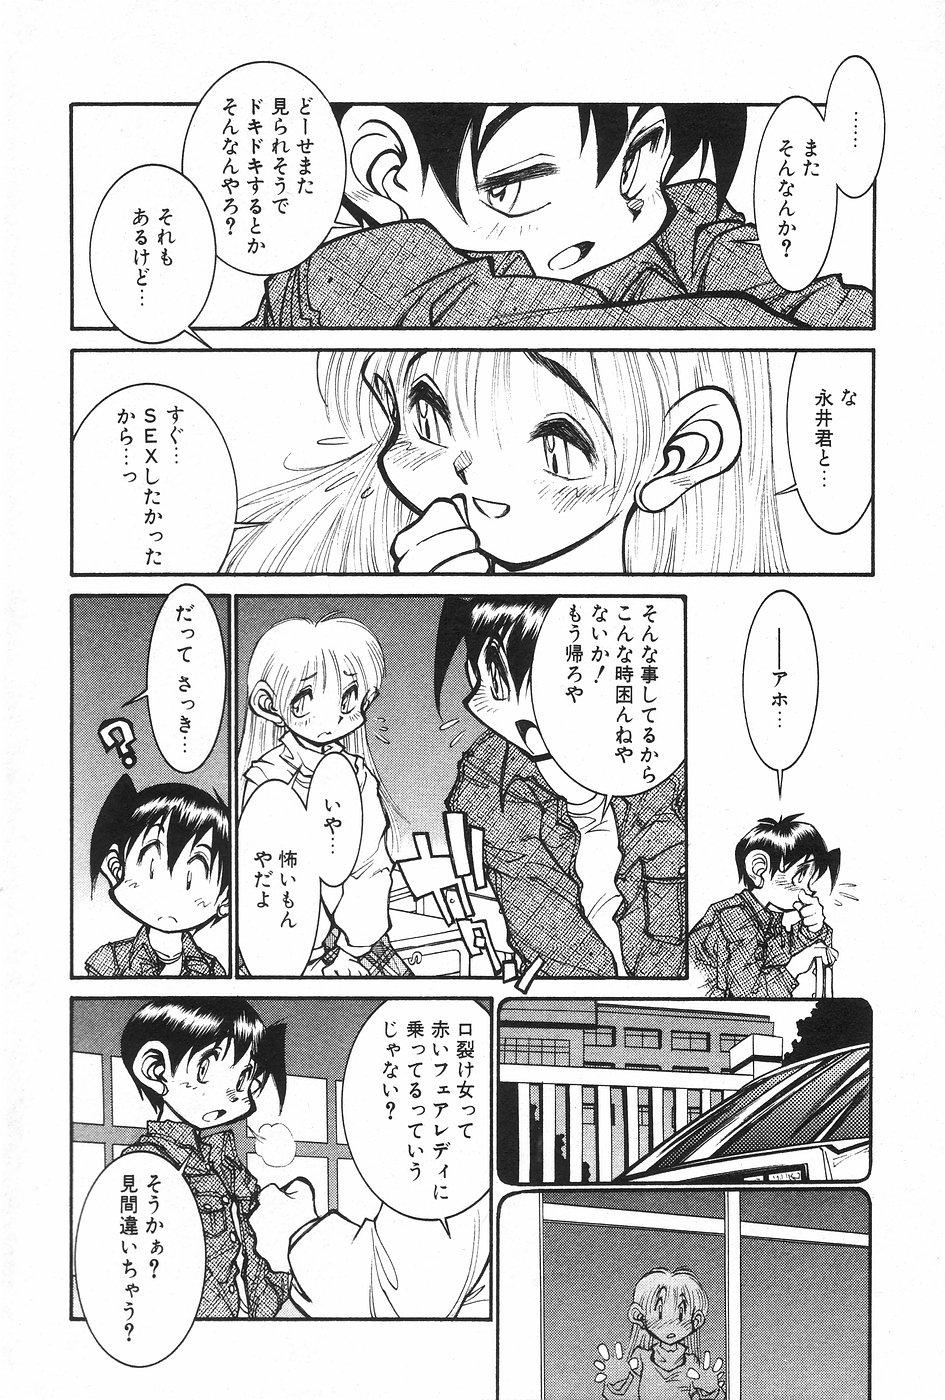 Manga Hotmilk 1997-04 8